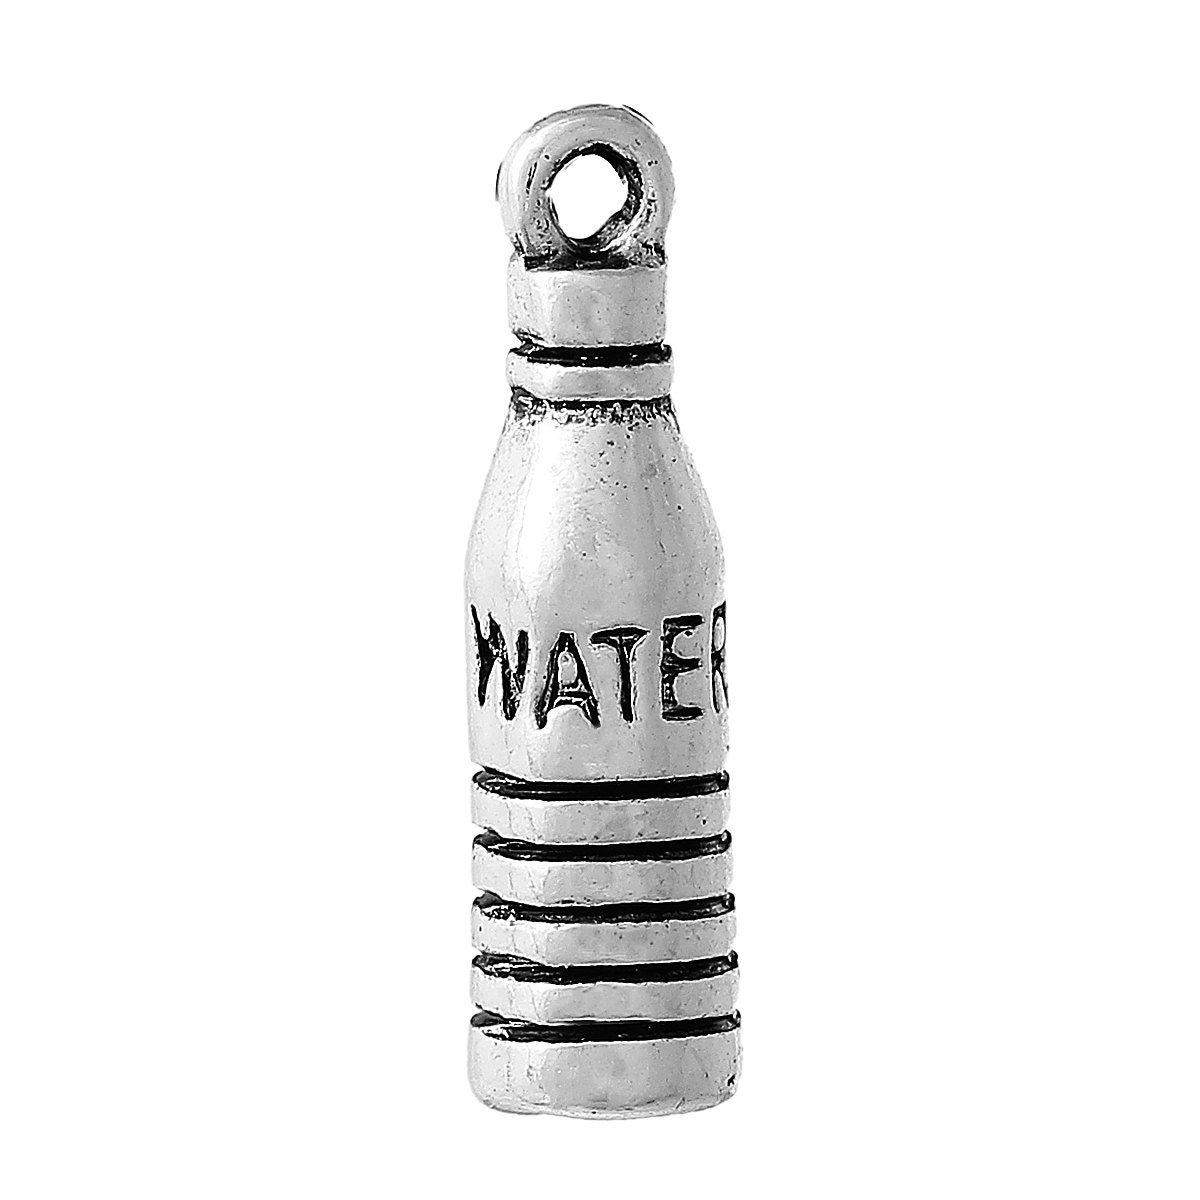 2pcs Evian Confetti Water Bottle Charms